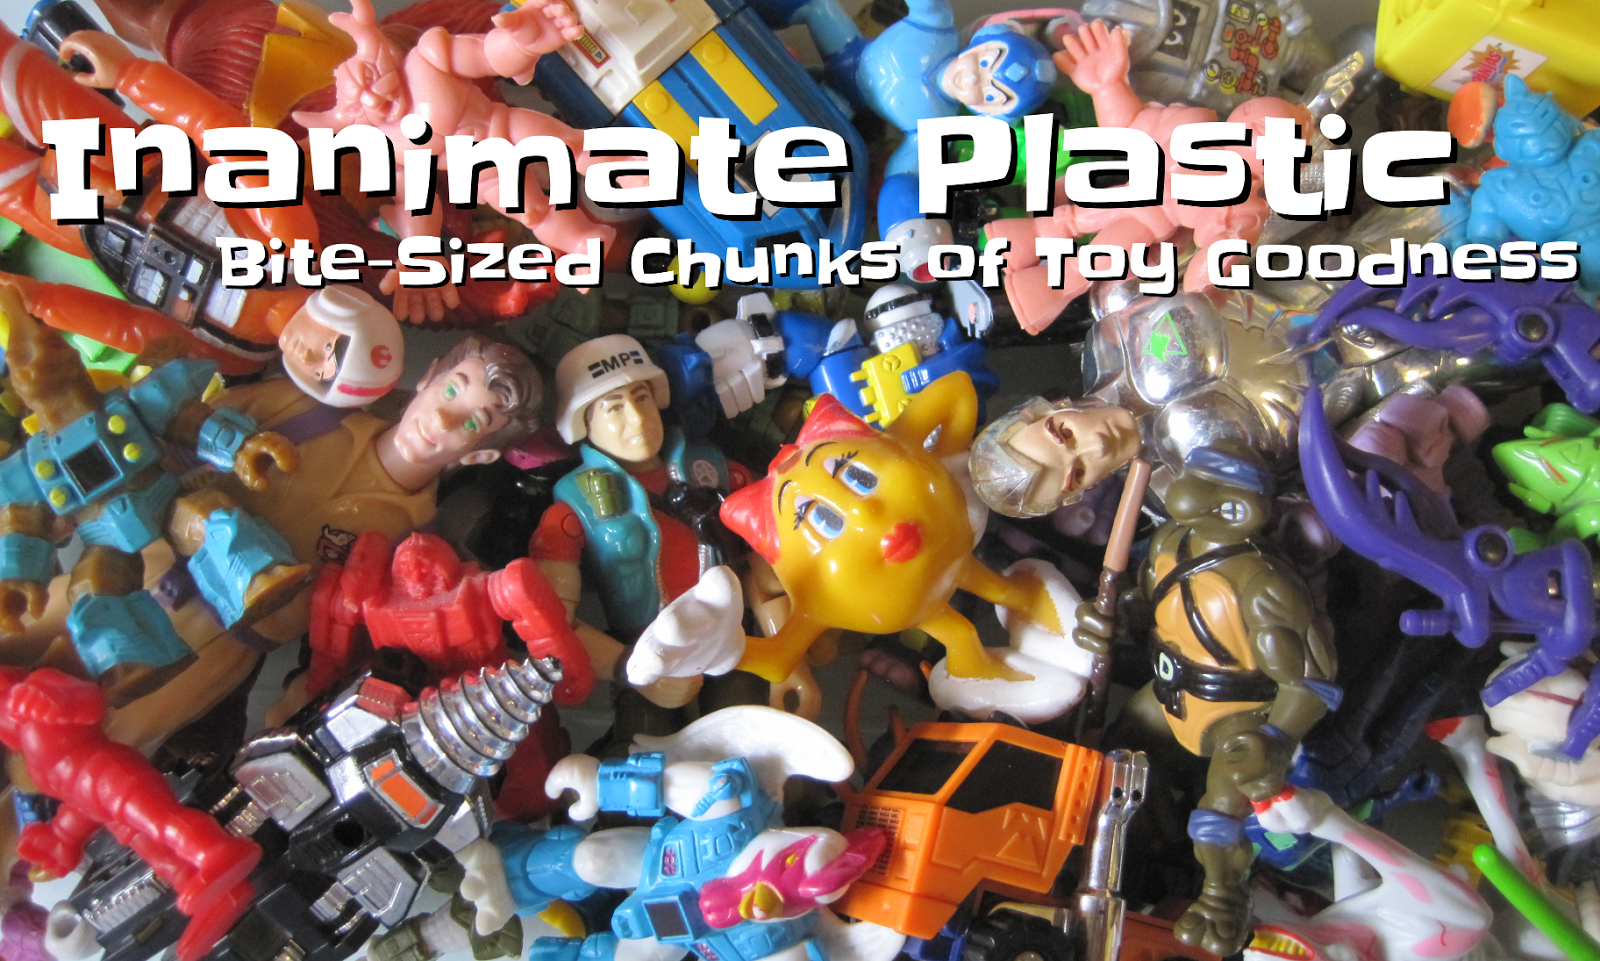 Inanimate Plastic